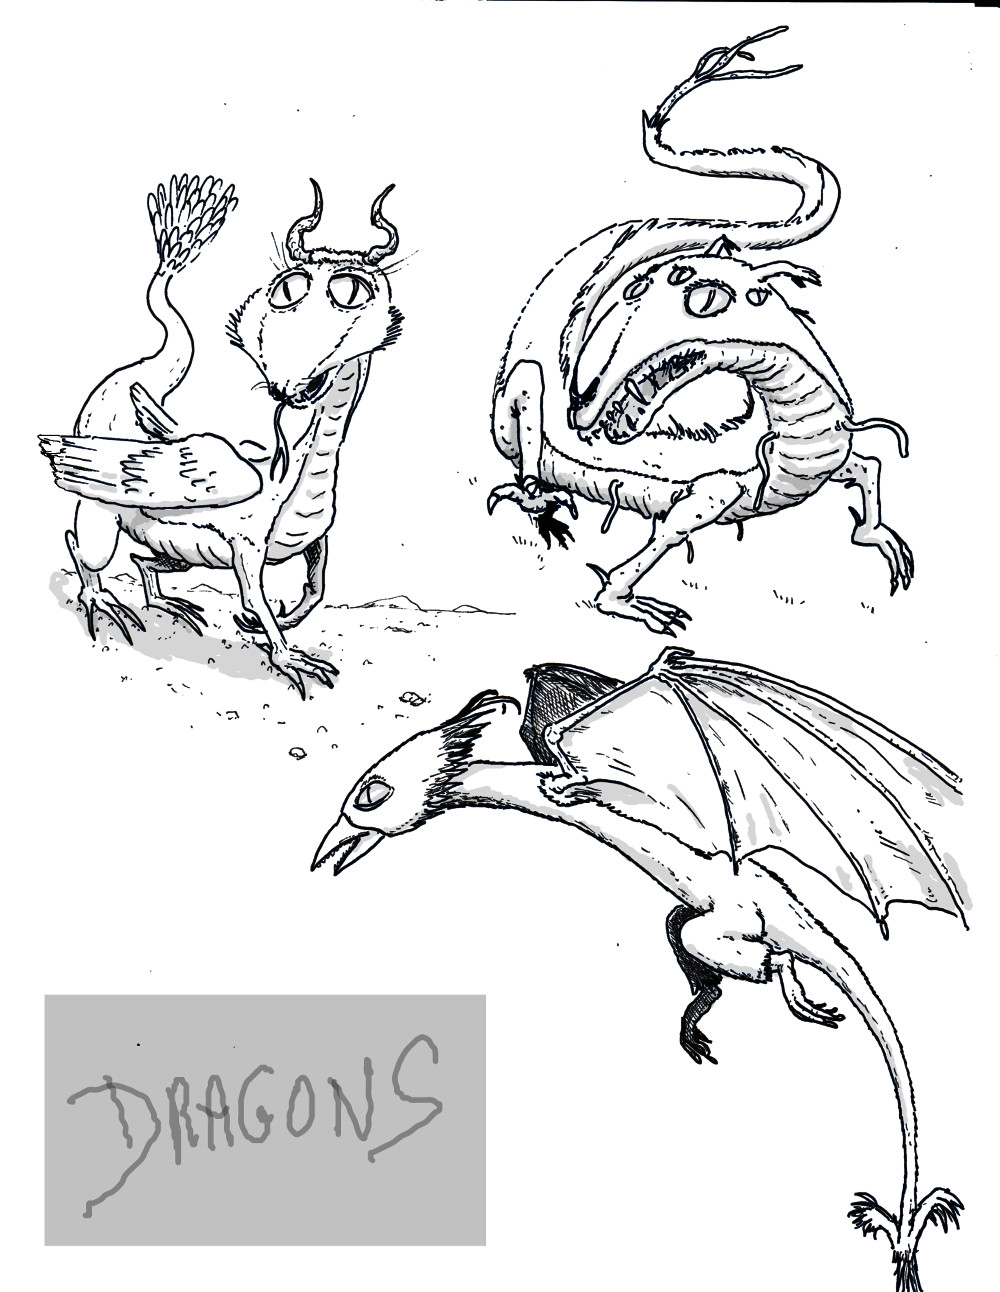 dessin de stefrex - Page 4 Dragon0003net